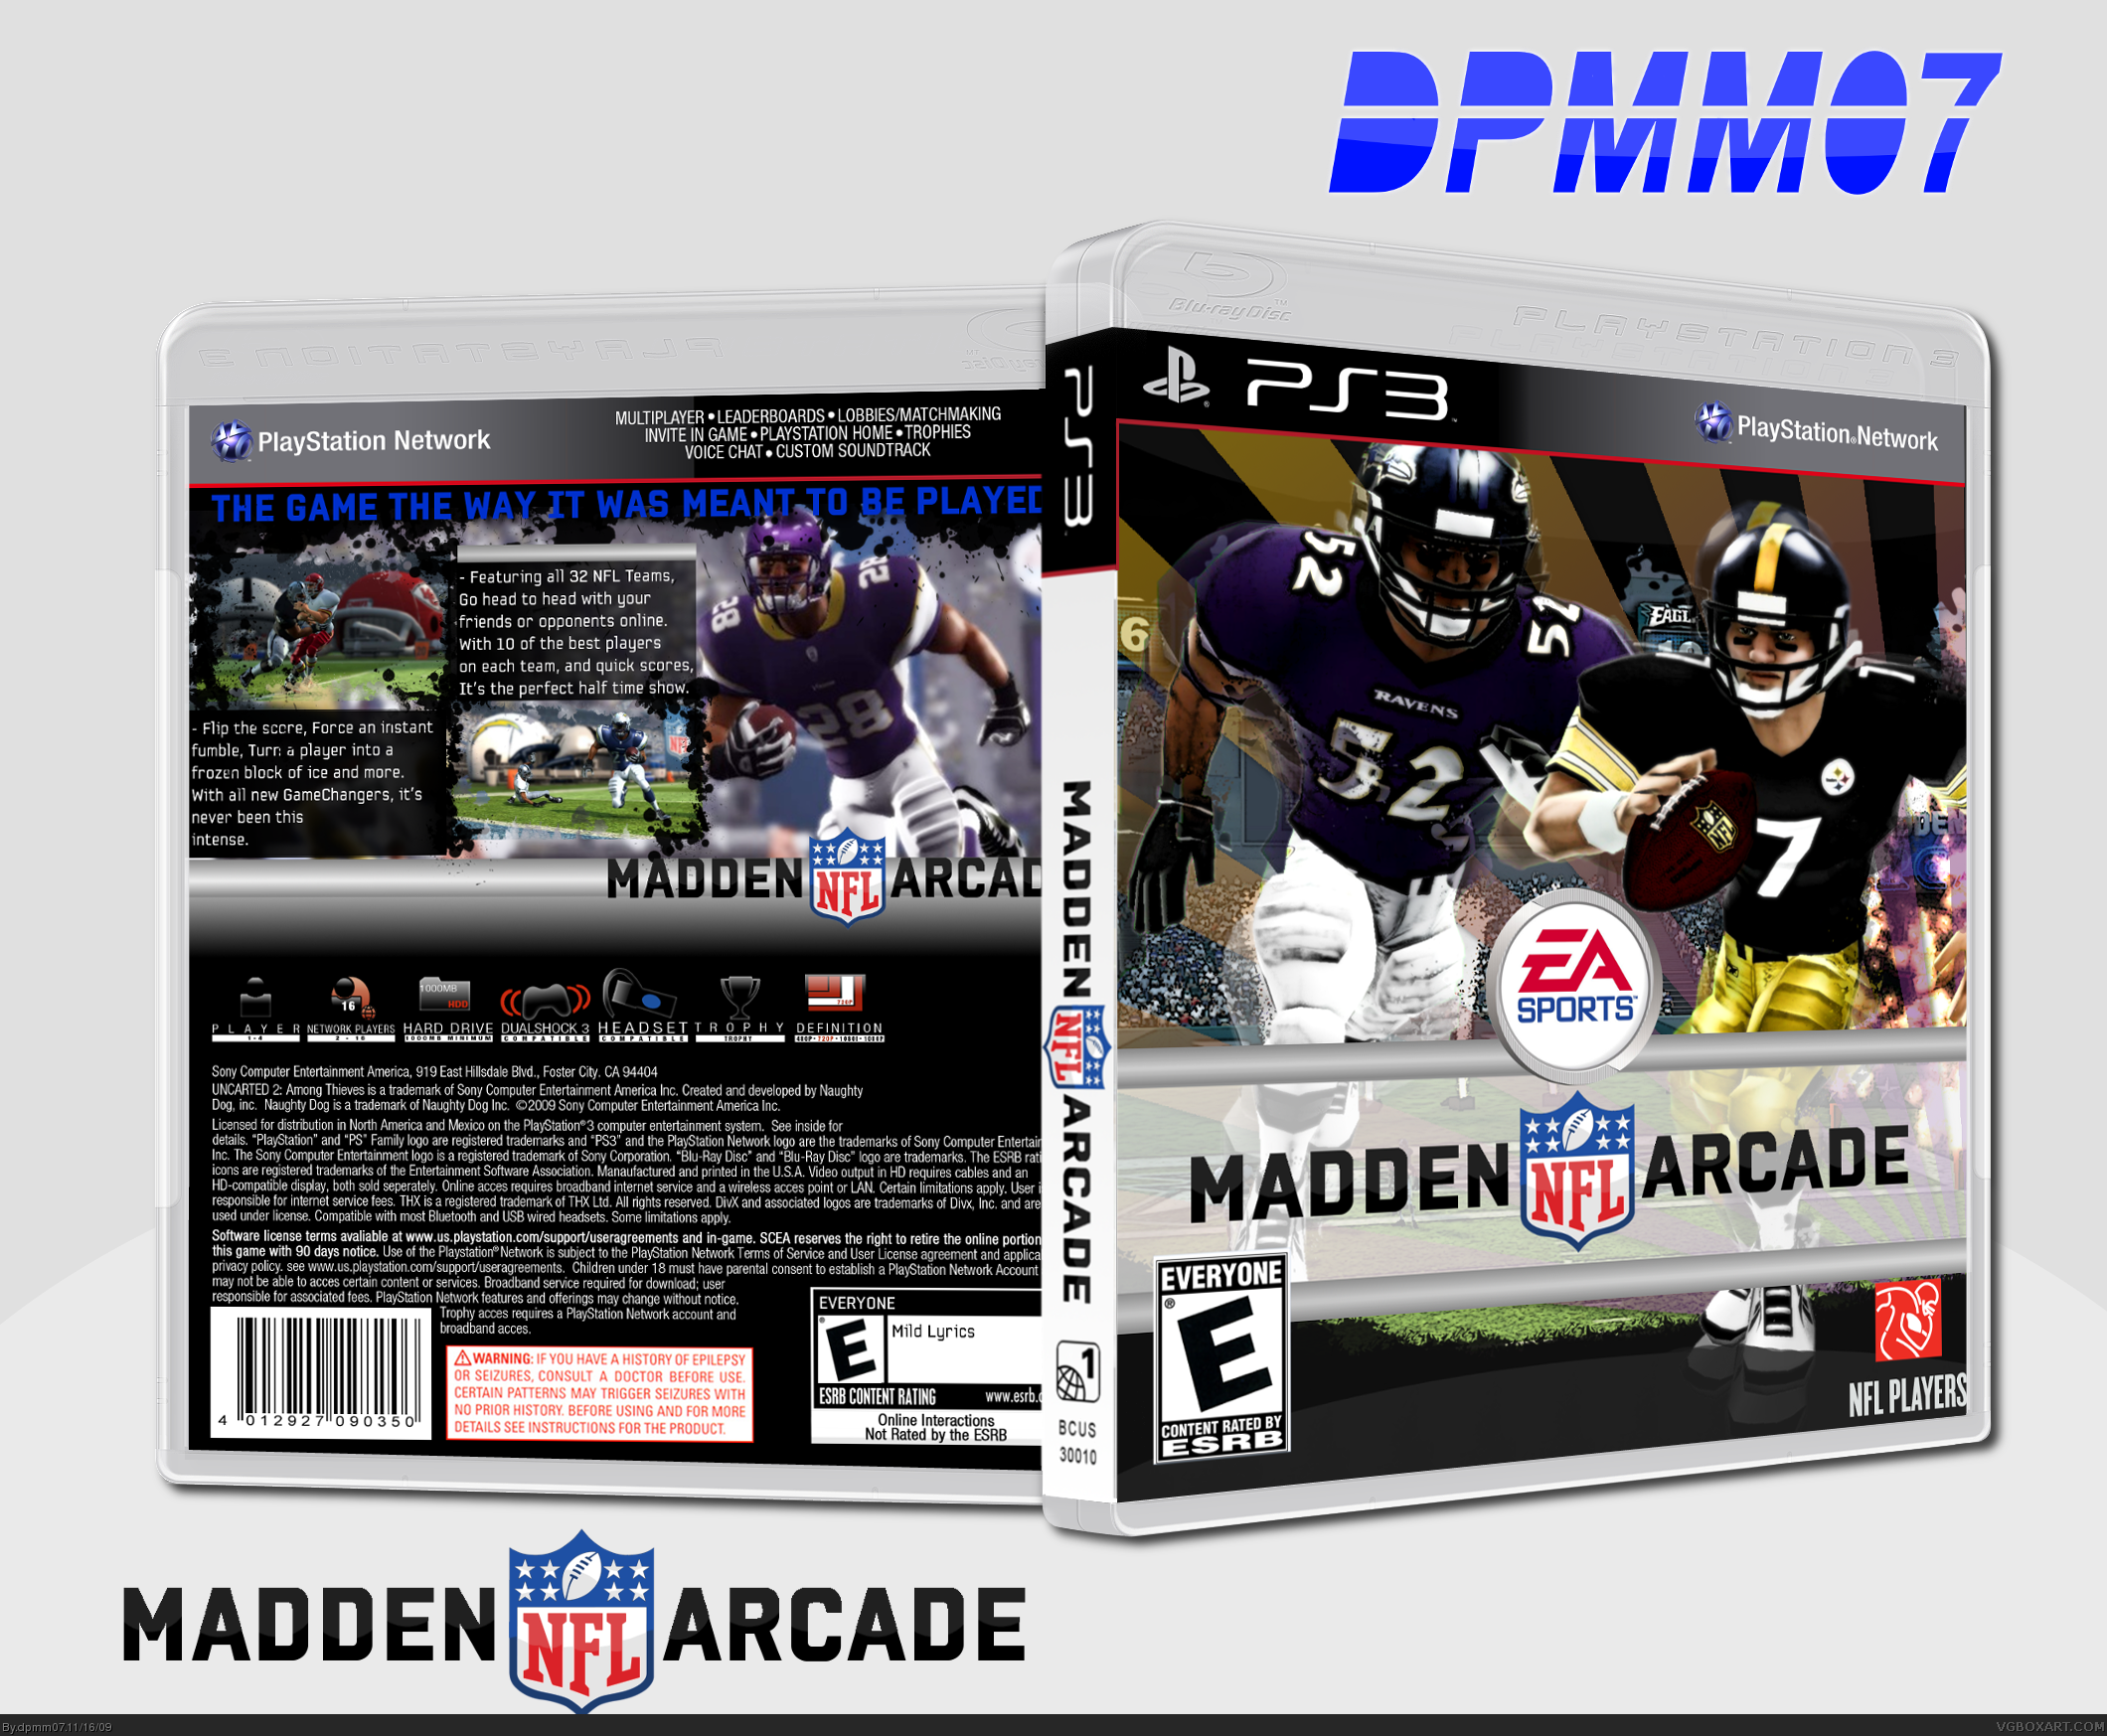 Madden NFL Arcade box cover